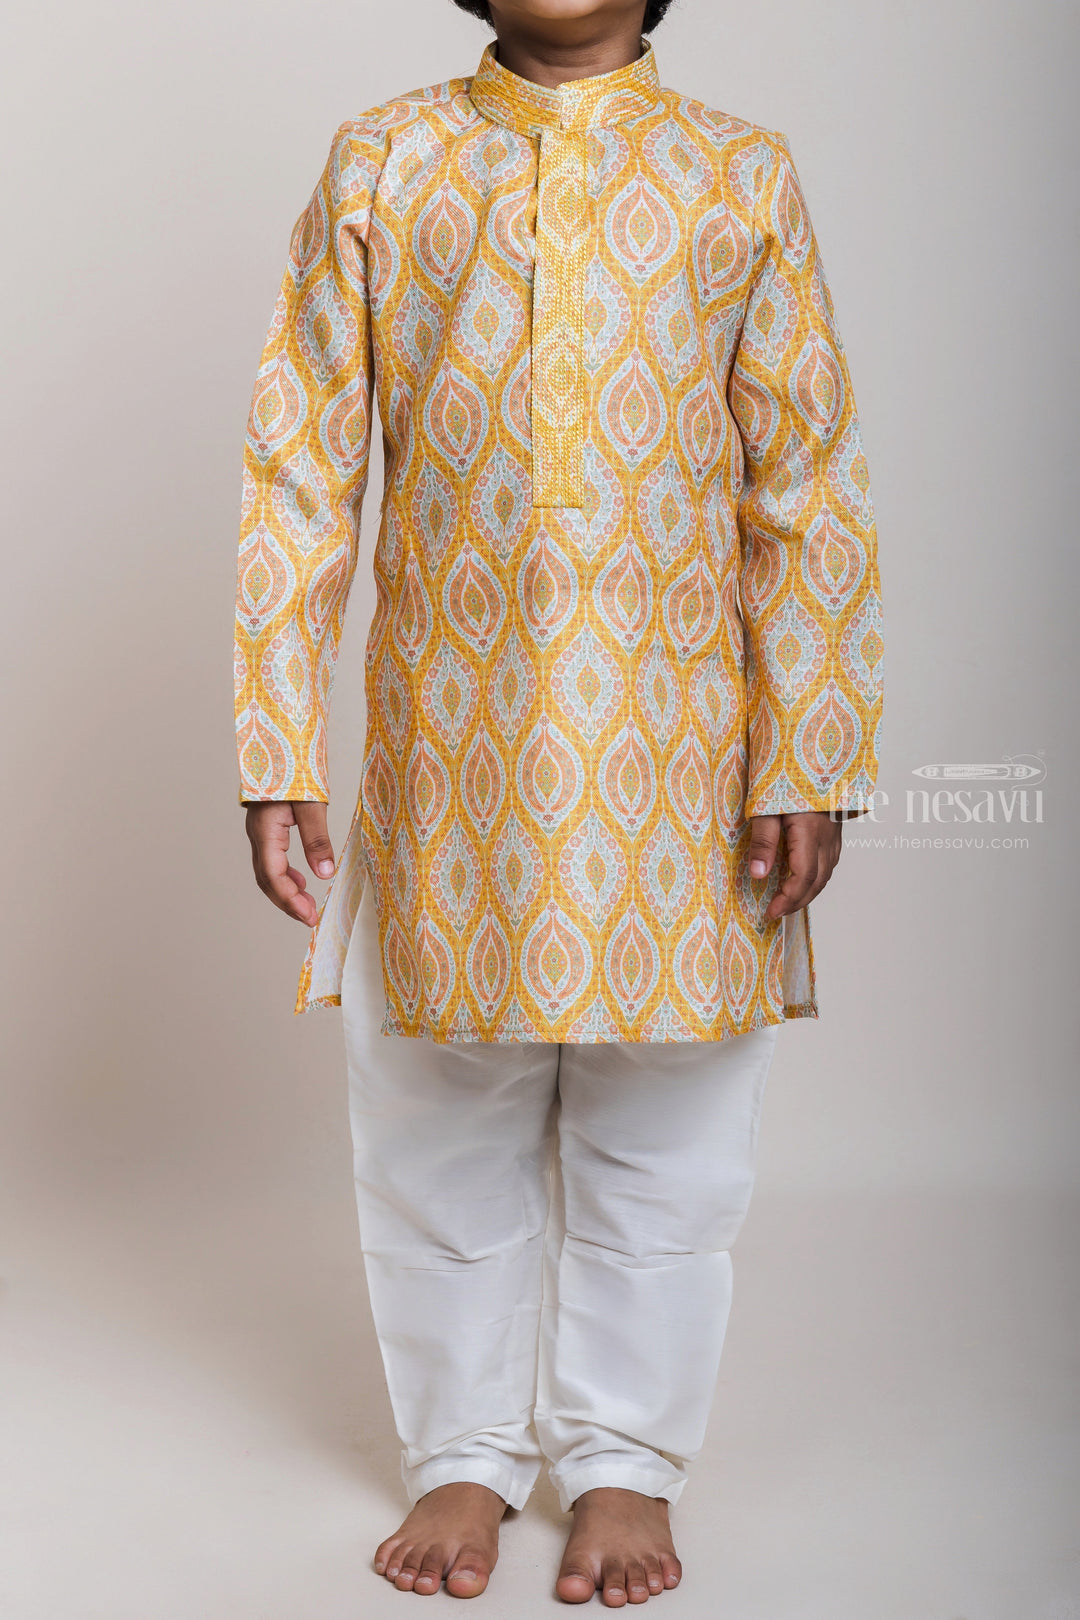 The Nesavu Boys Kurtha Set Latest Printed Yellow Cotton Kurta With Elastic Pyjama For Little Boys Nesavu Best Ethnic Wear Collection For Boys| Exclusive Designs| The Nesavu